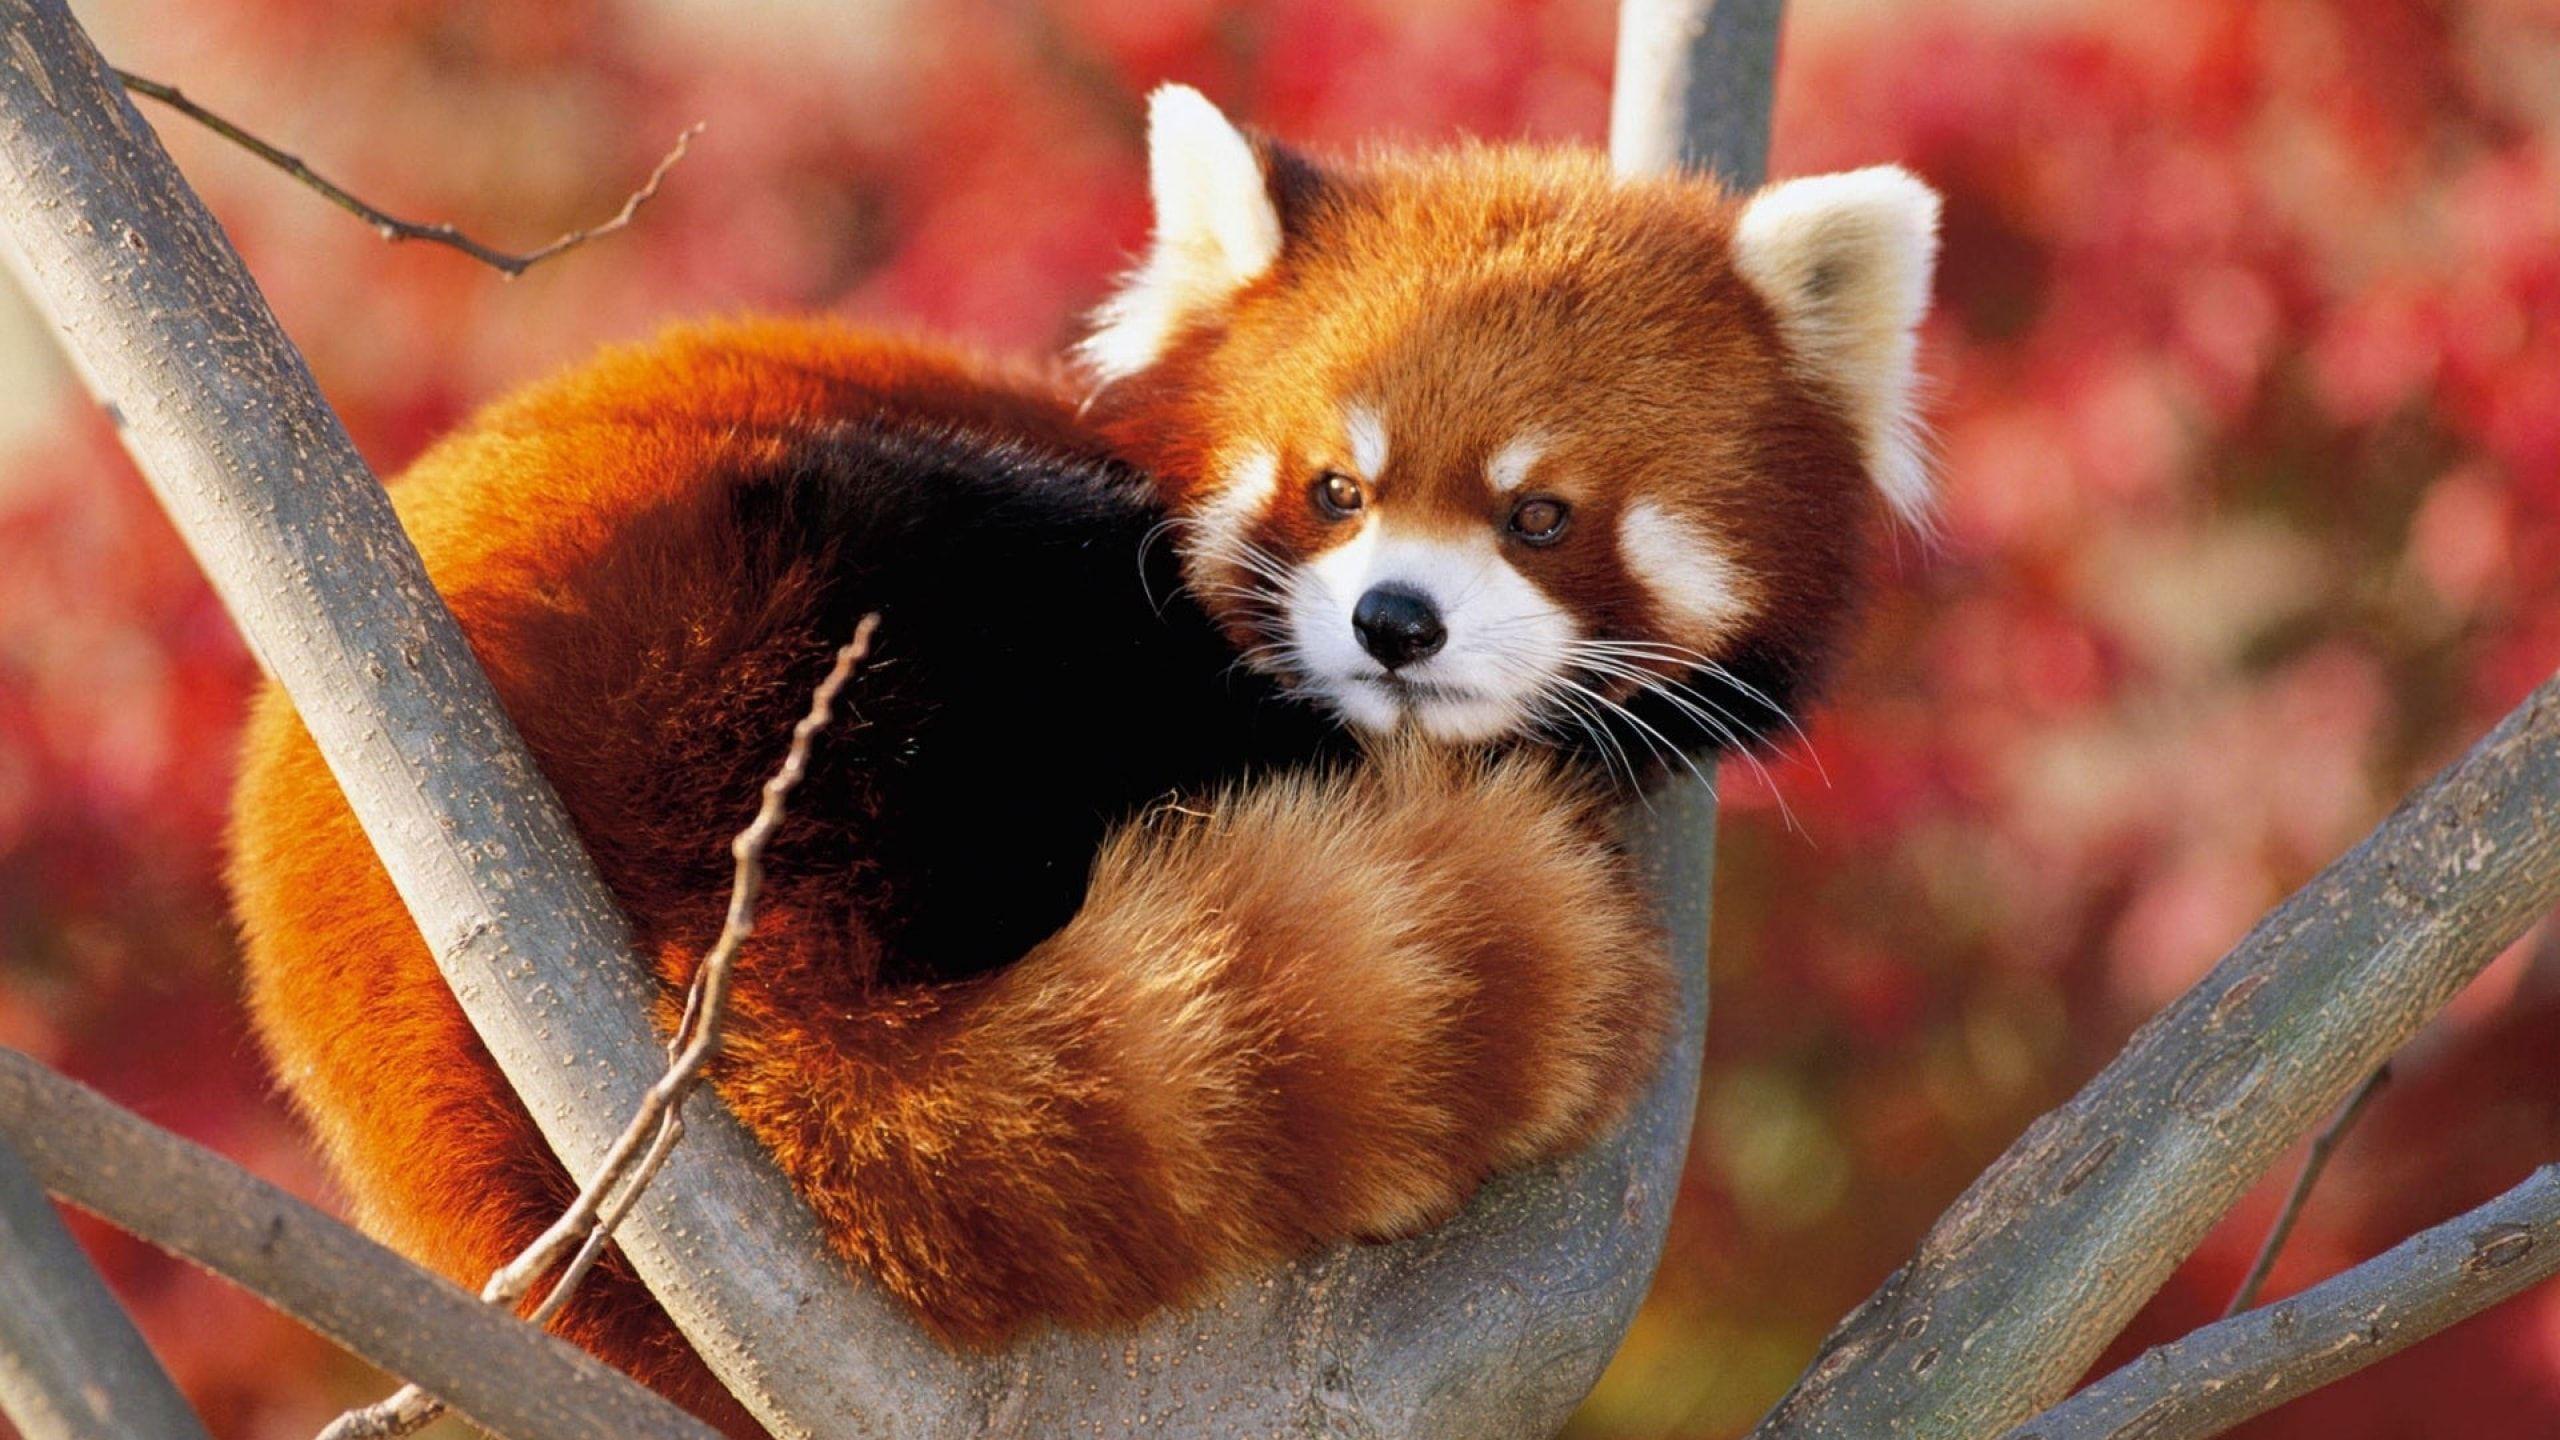 Red Panda Wallpapers - Top Free Red Panda Backgrounds ...